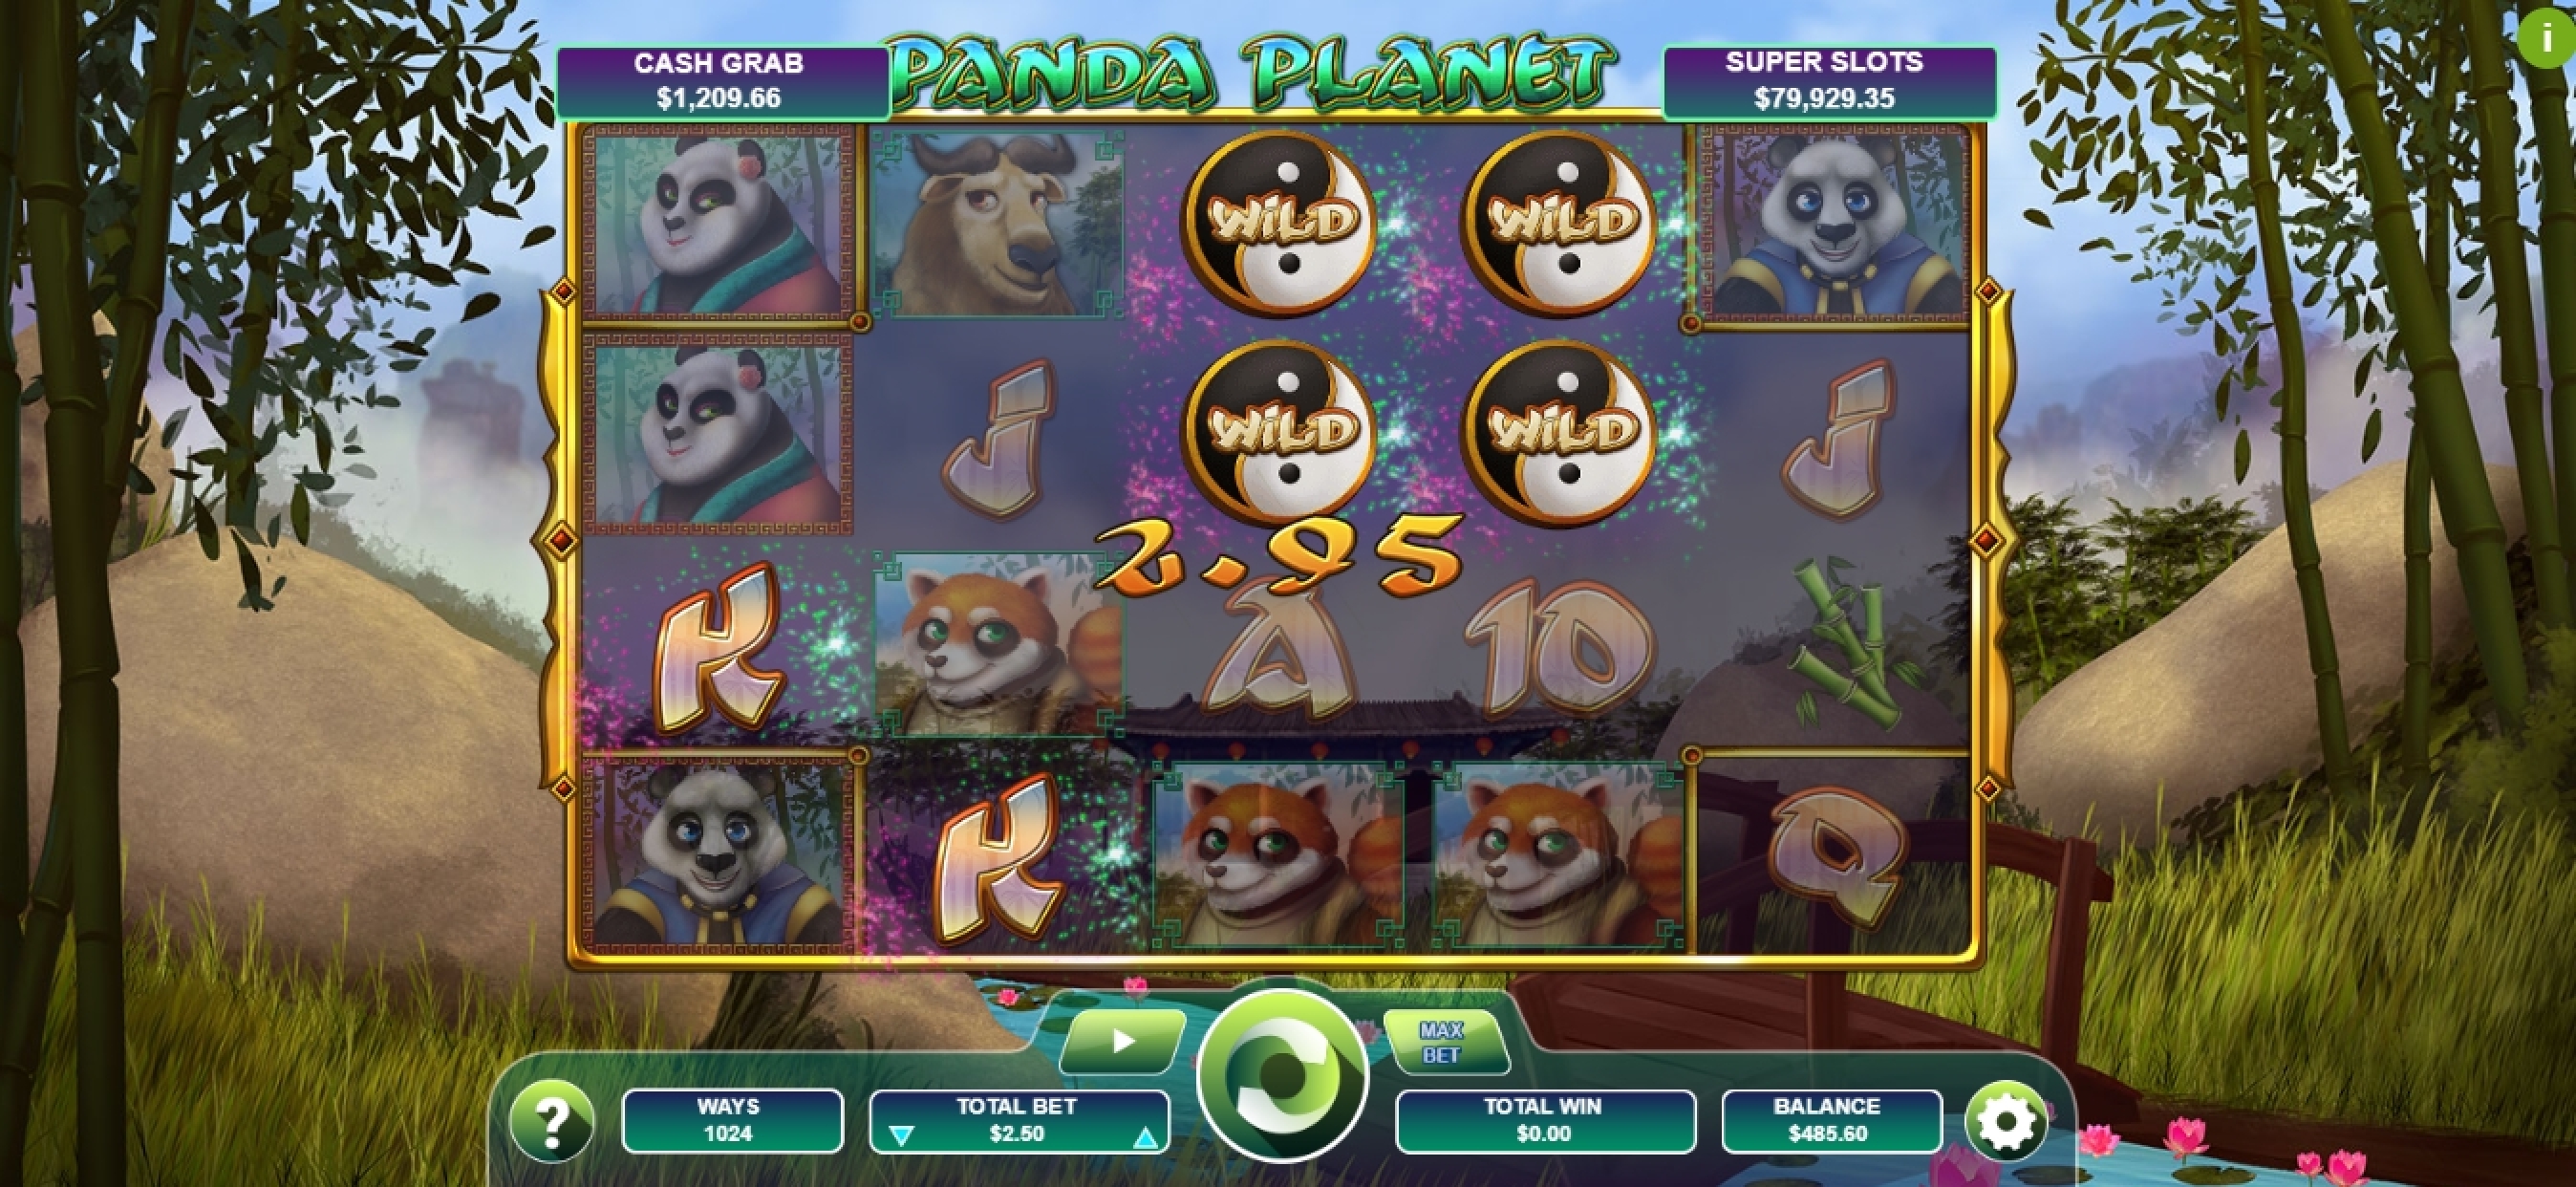 Win Money in Panda Planet Free Slot Game by Arrows Edge